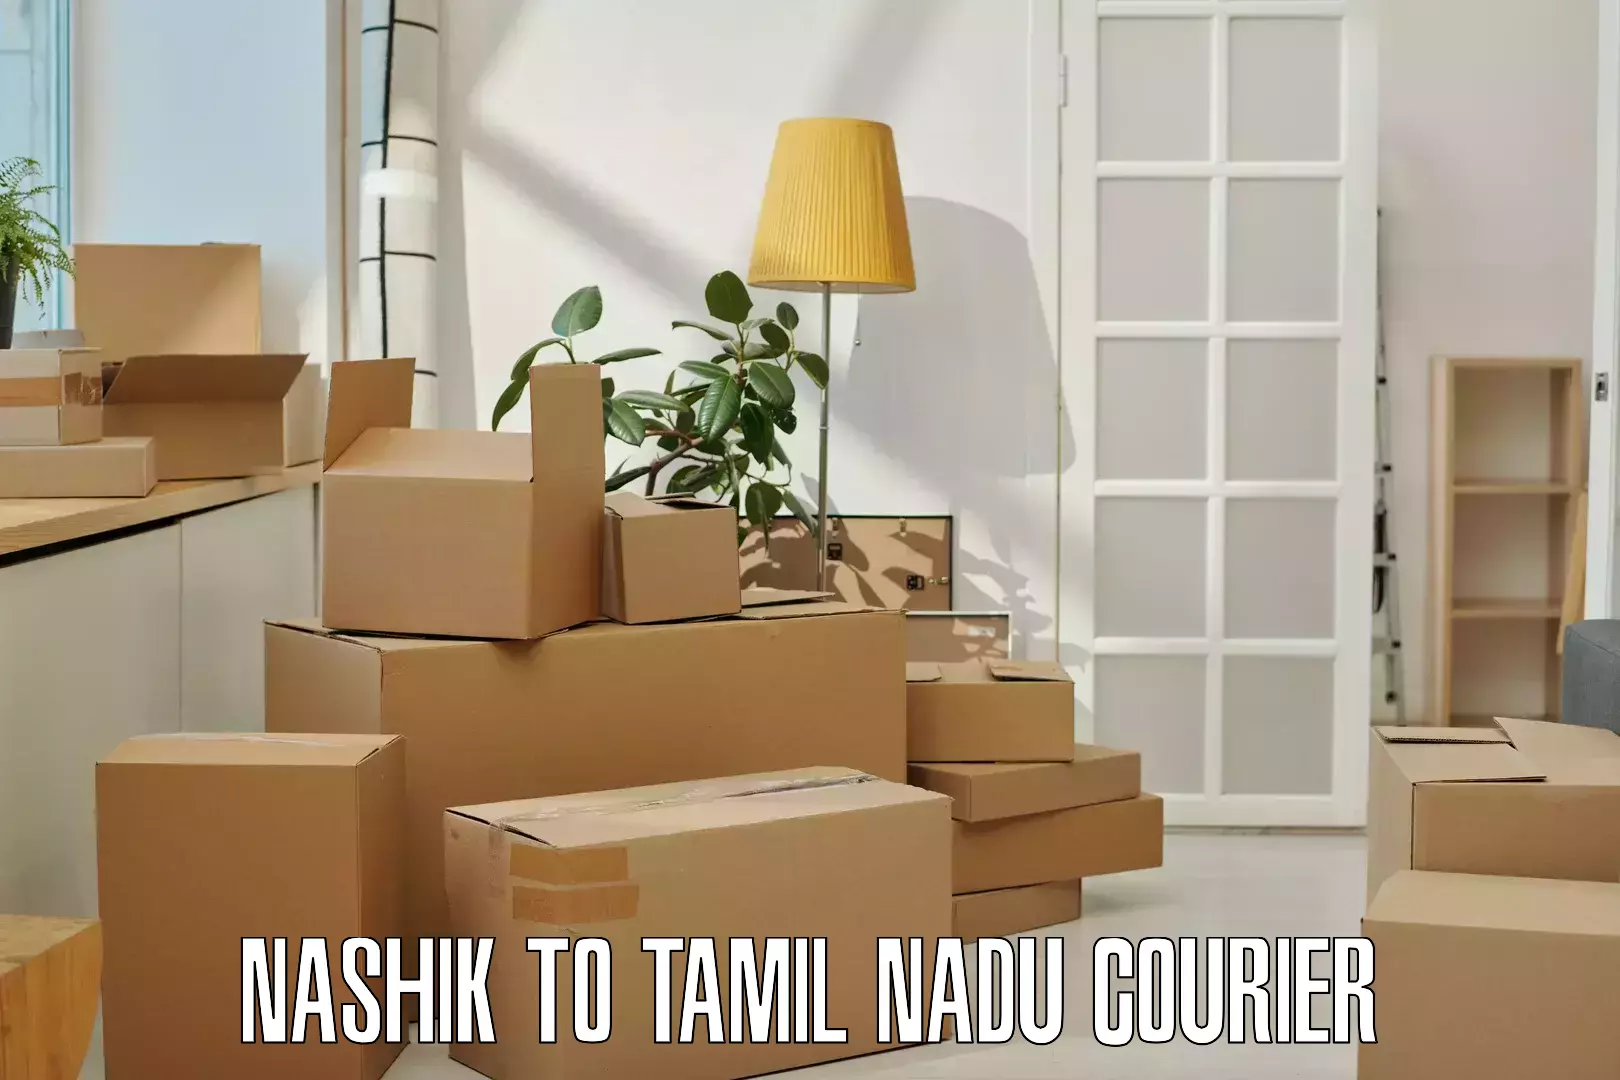 Doorstep delivery service Nashik to Tamil Nadu